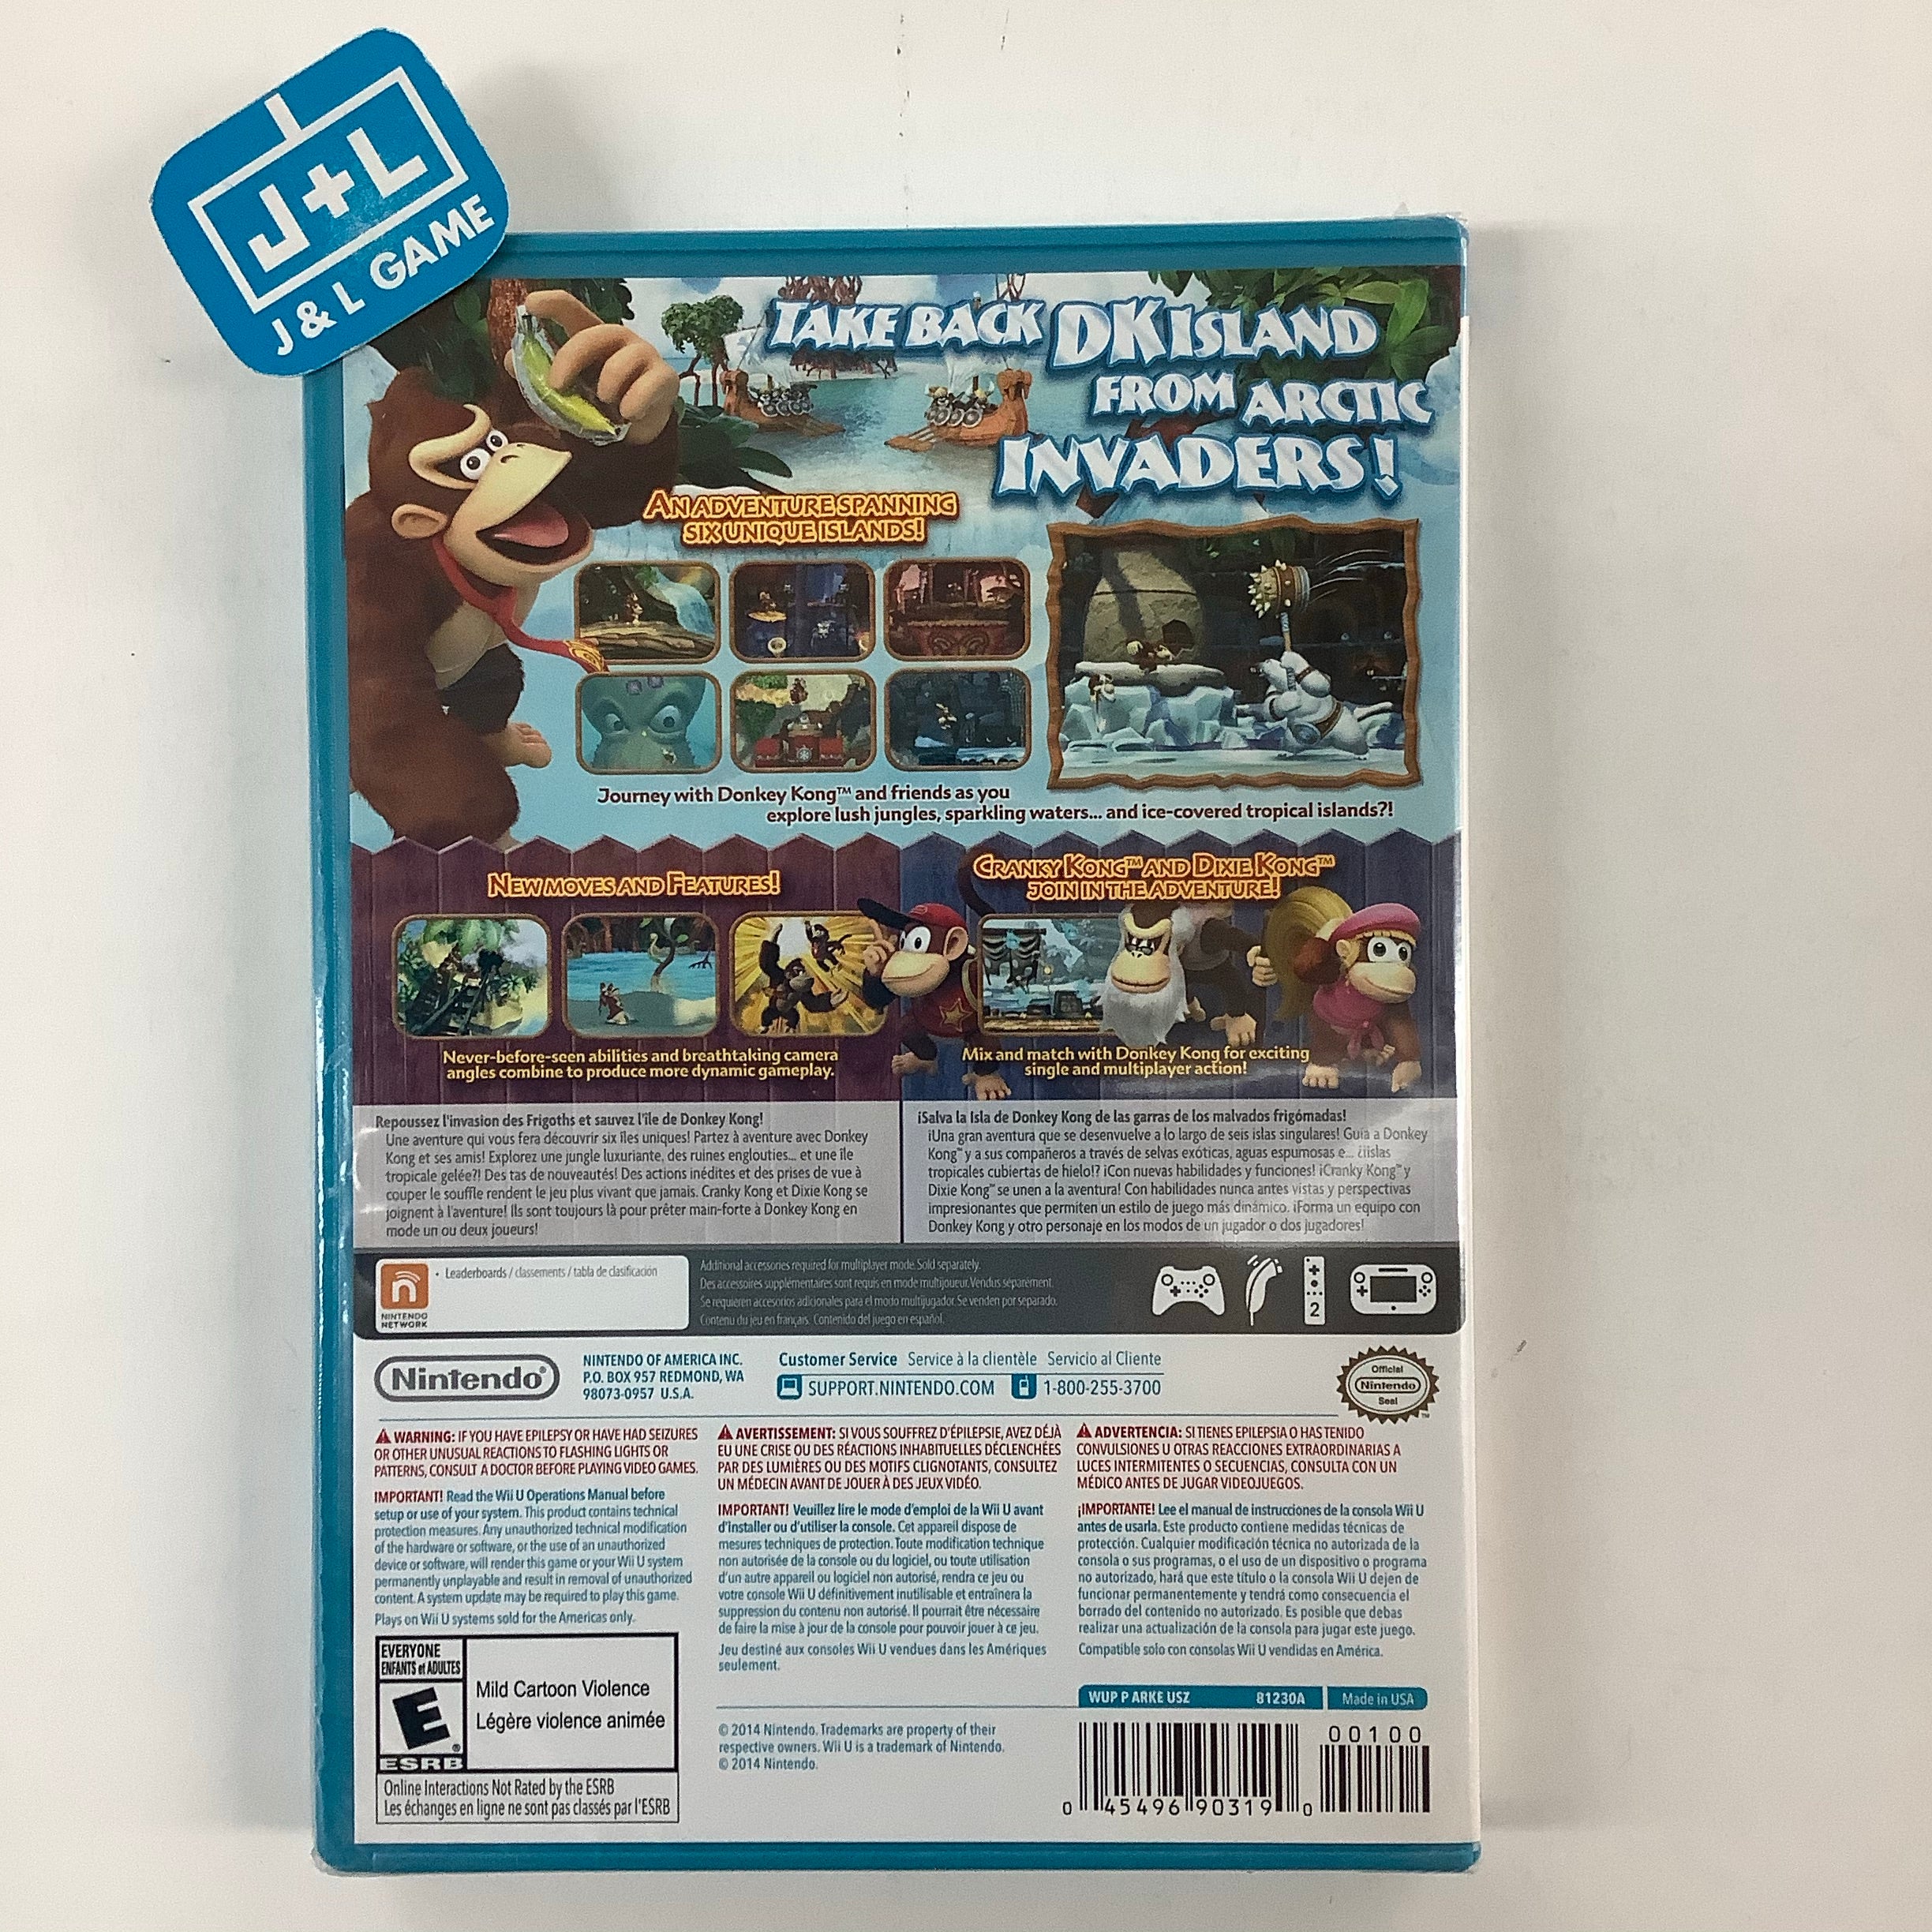 Donkey Kong Country: Tropical Freeze - Nintendo Wii U Video Games Nintendo   